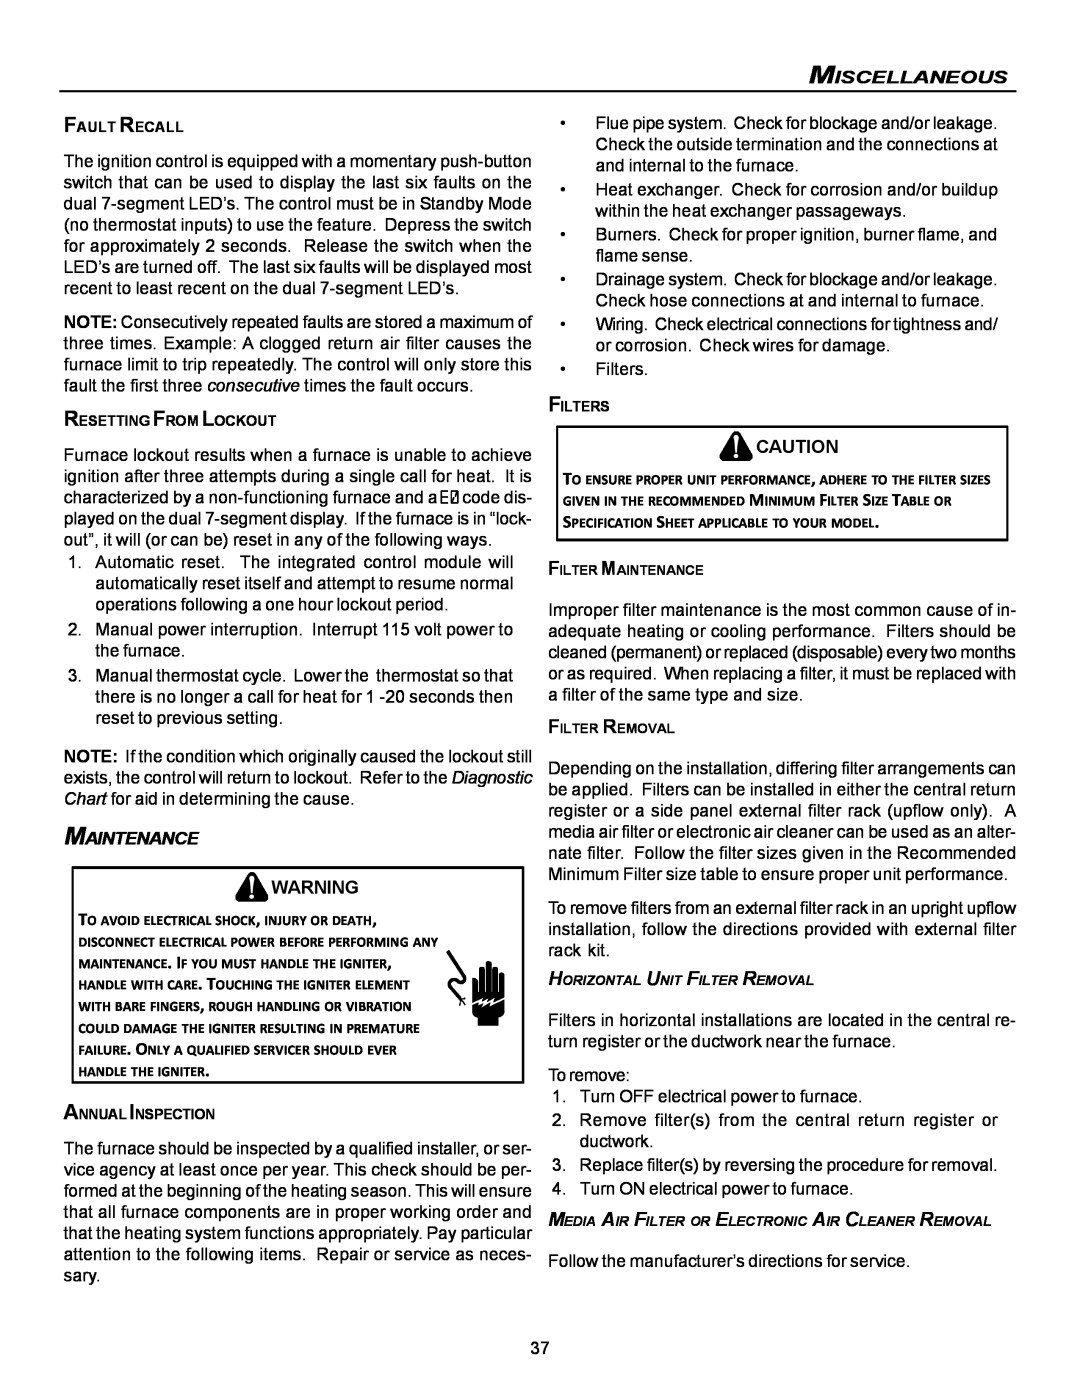 Goodman Mfg VC8 instruction manual Miscellaneous, Maintenance 